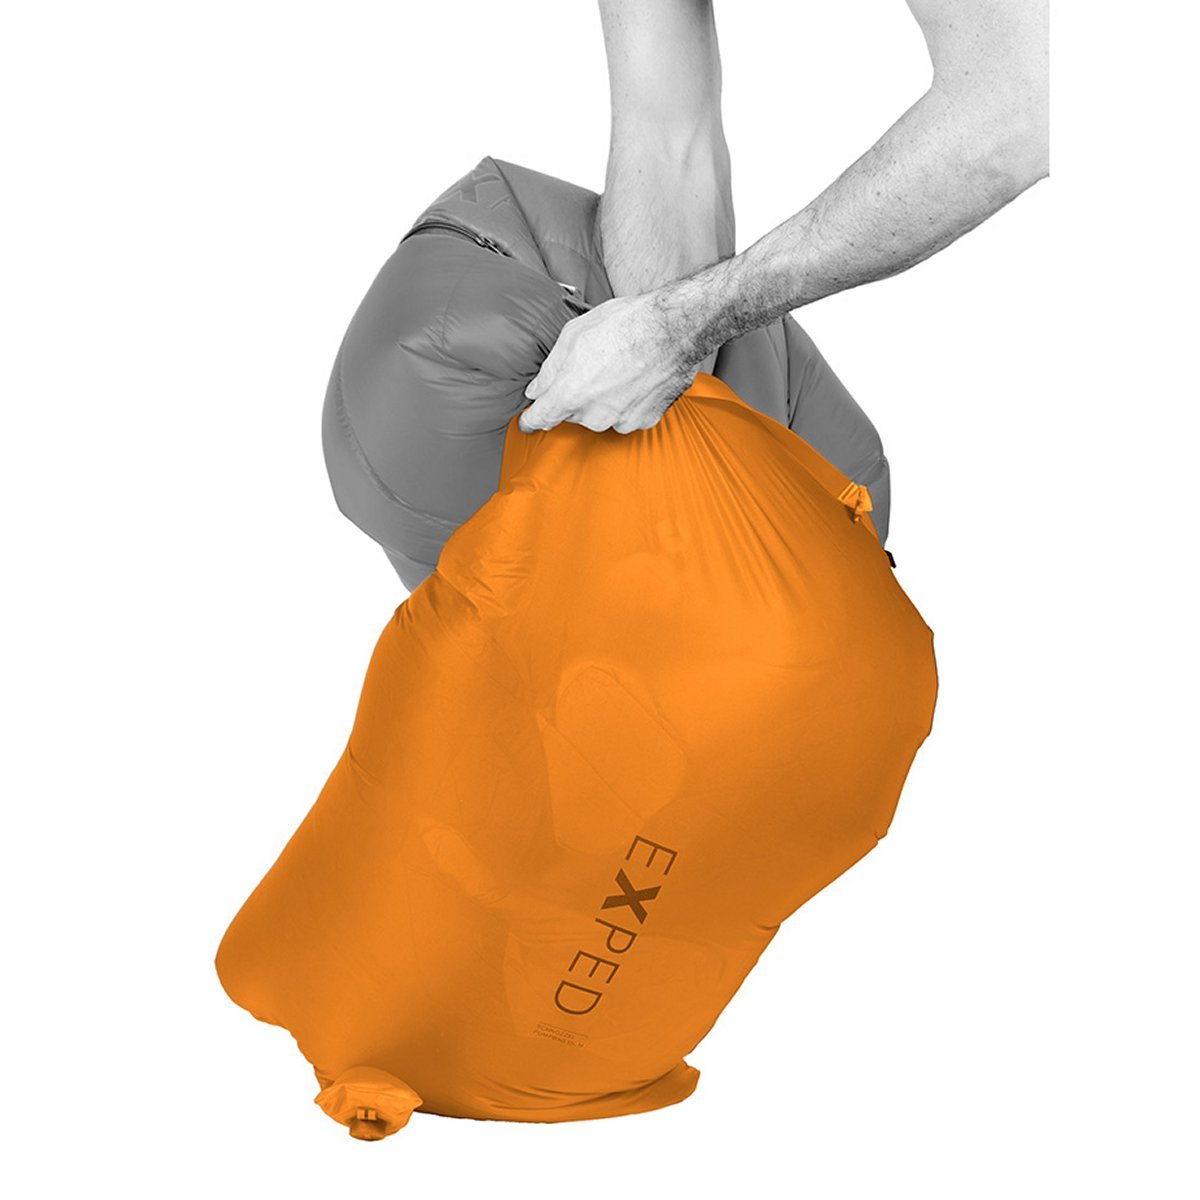 ek spec do shoe nozzle pump bag UL S (395340) | air pump bedding sleeping mat mat sak dry bag 